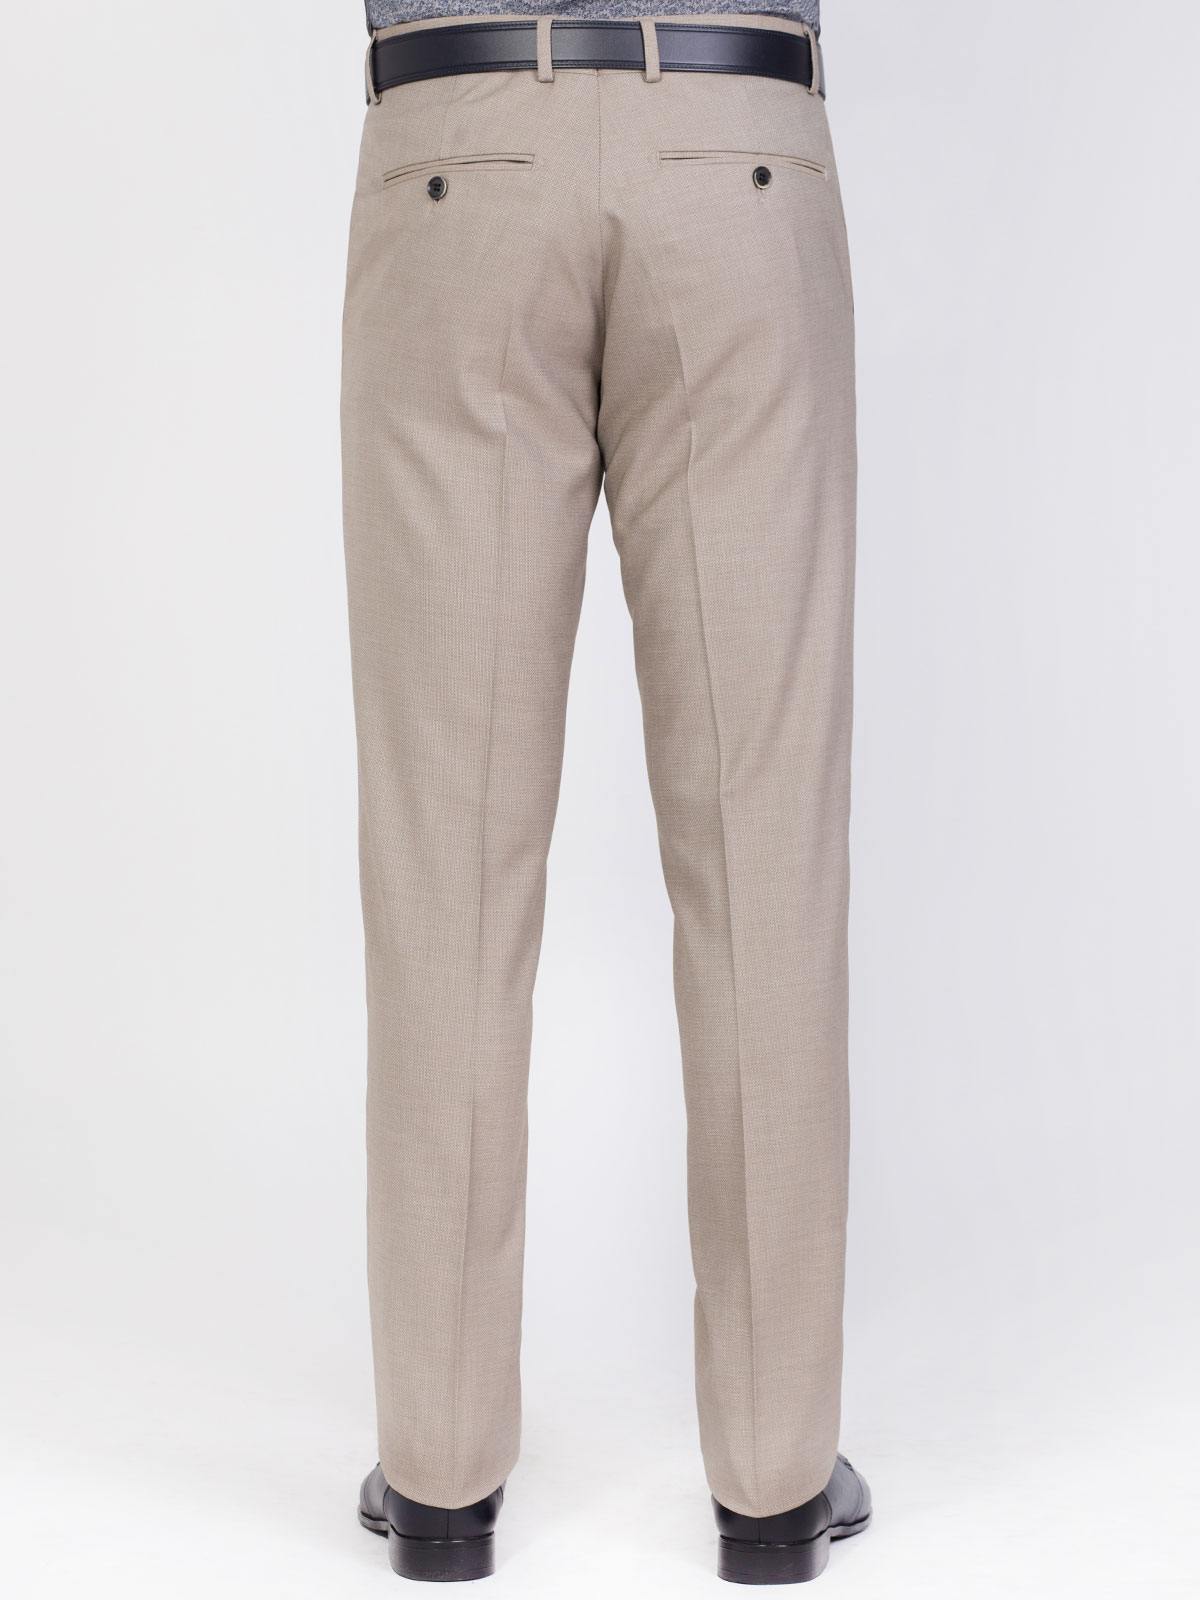 Elegant Beige Men's Trousers, Men's Beige Straight Pants